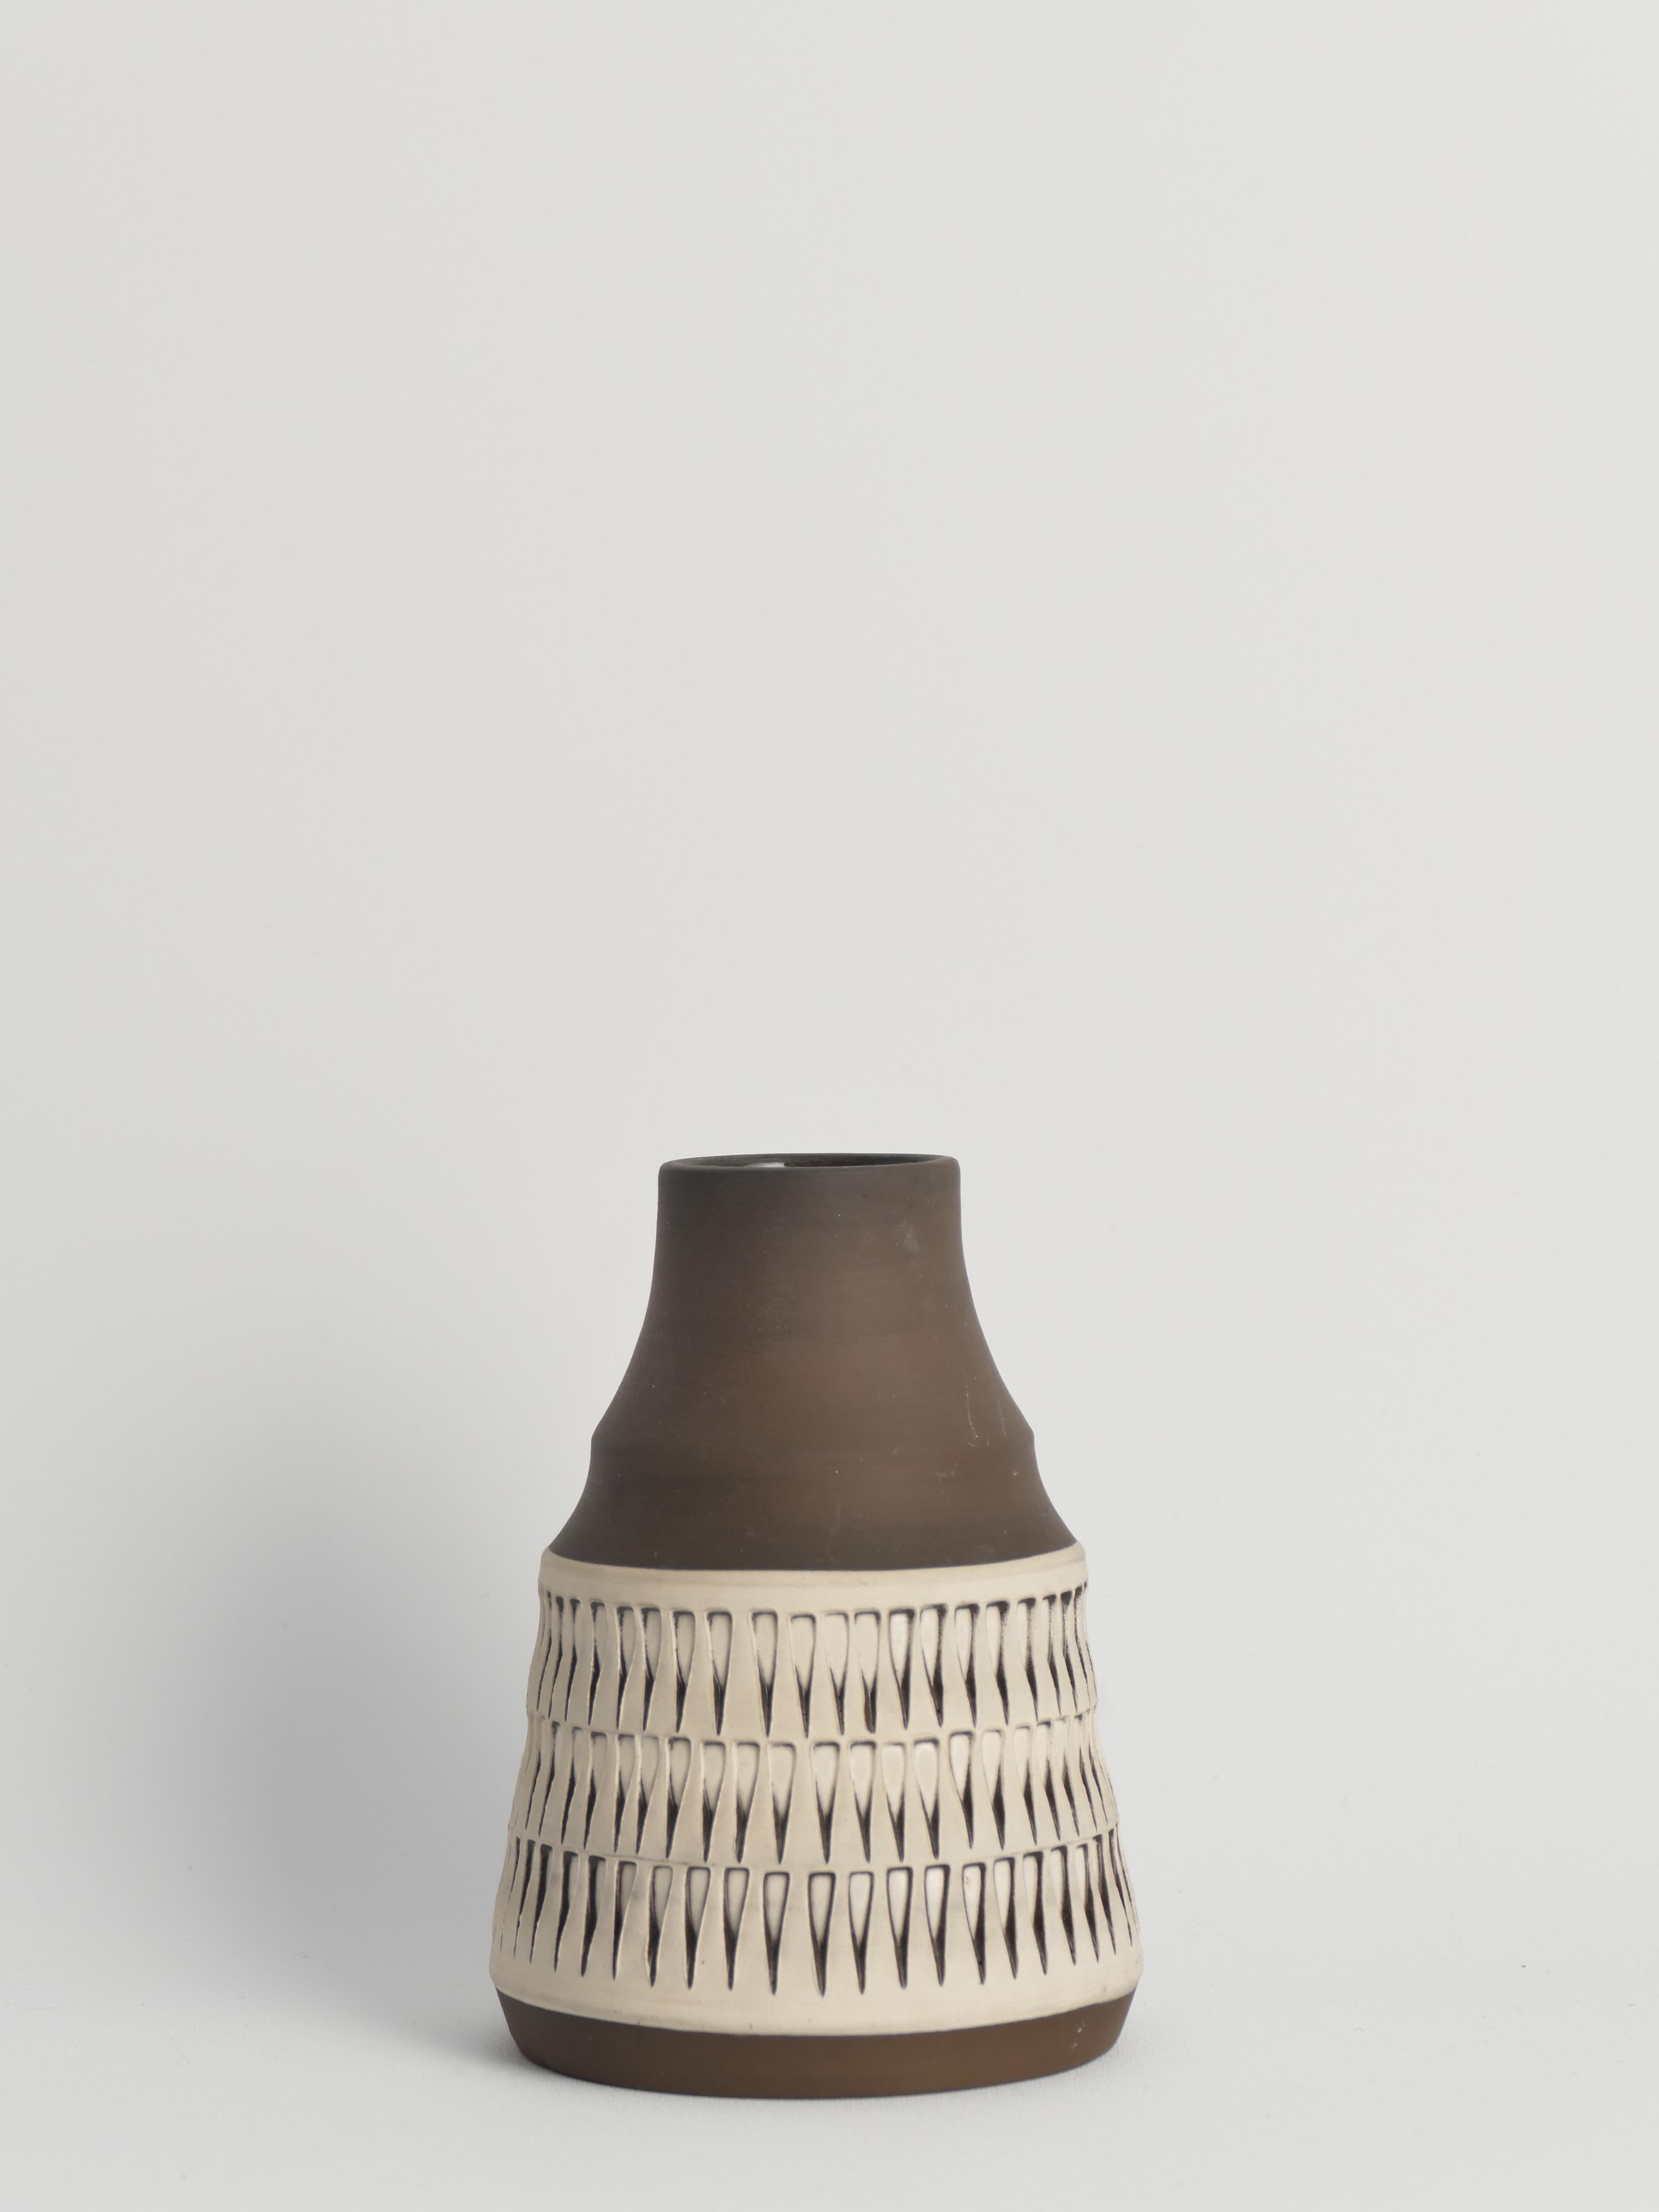 Smaltato Vaso in ceramica moderna scandinava, di Tomas Anagrius per Alingsås Keramik in vendita